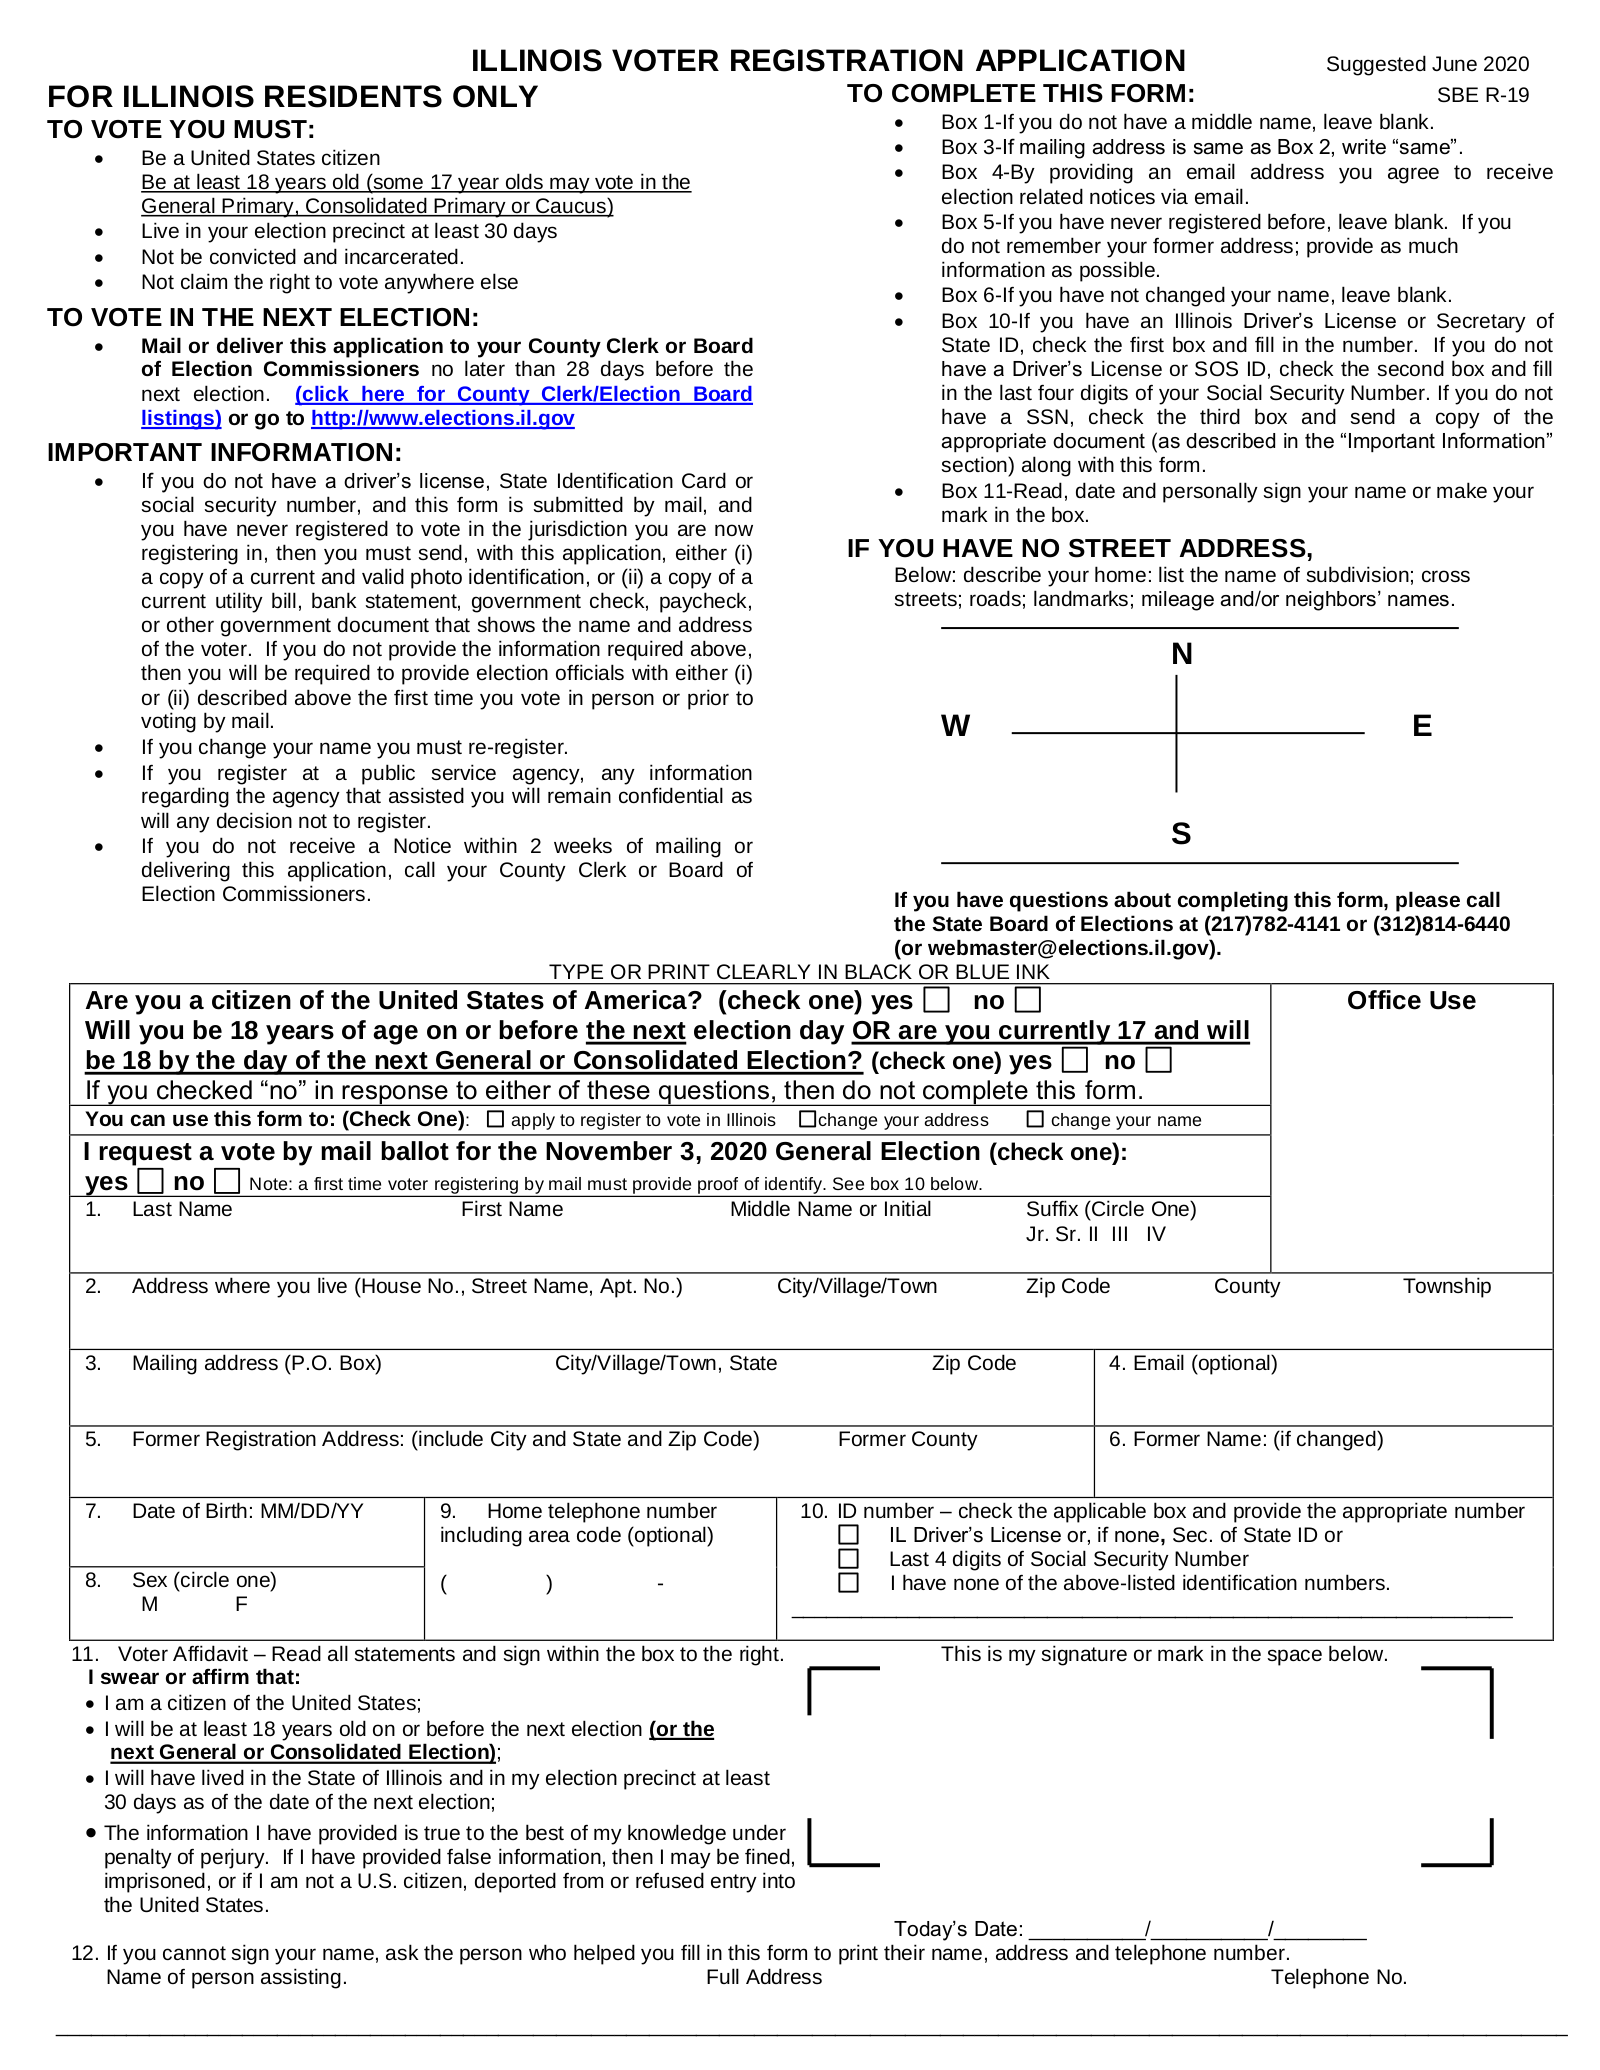 Illinois Voter Registration Form – Register to Vote in IL